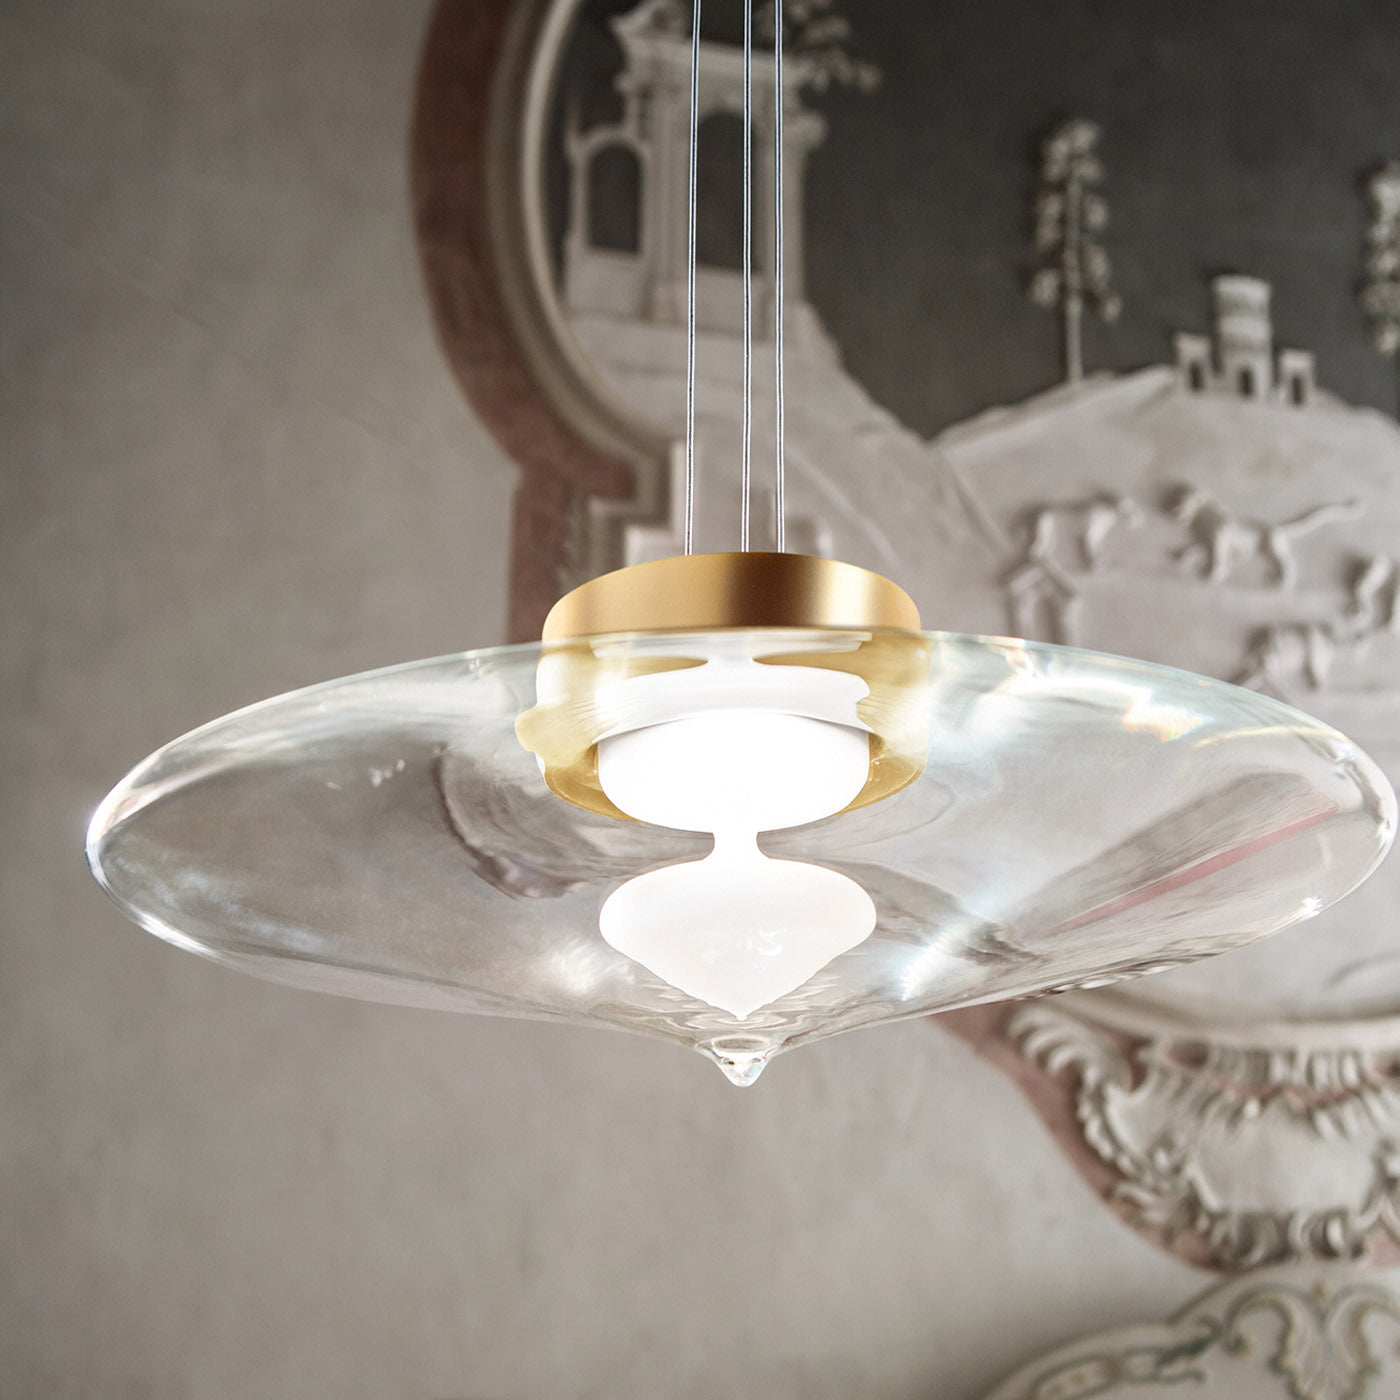 Desideria Burnished and Transparent Pendant Lamp - Alternative view 1